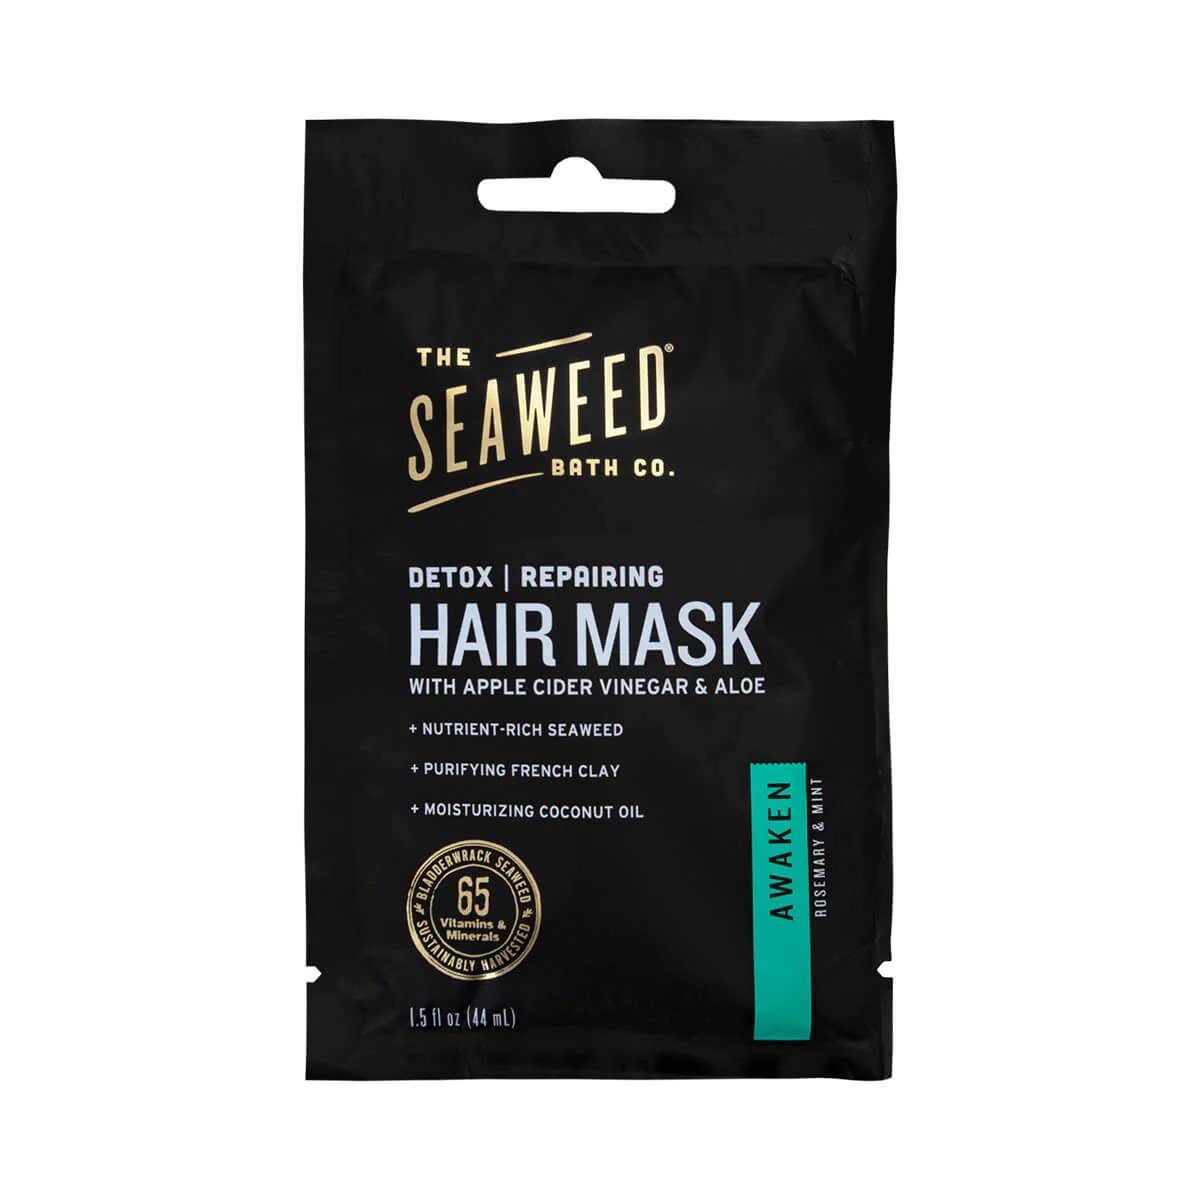 The Seaweed Bath Co. Detox Hair Mask Rosemary Mint 1.5 oz Packet